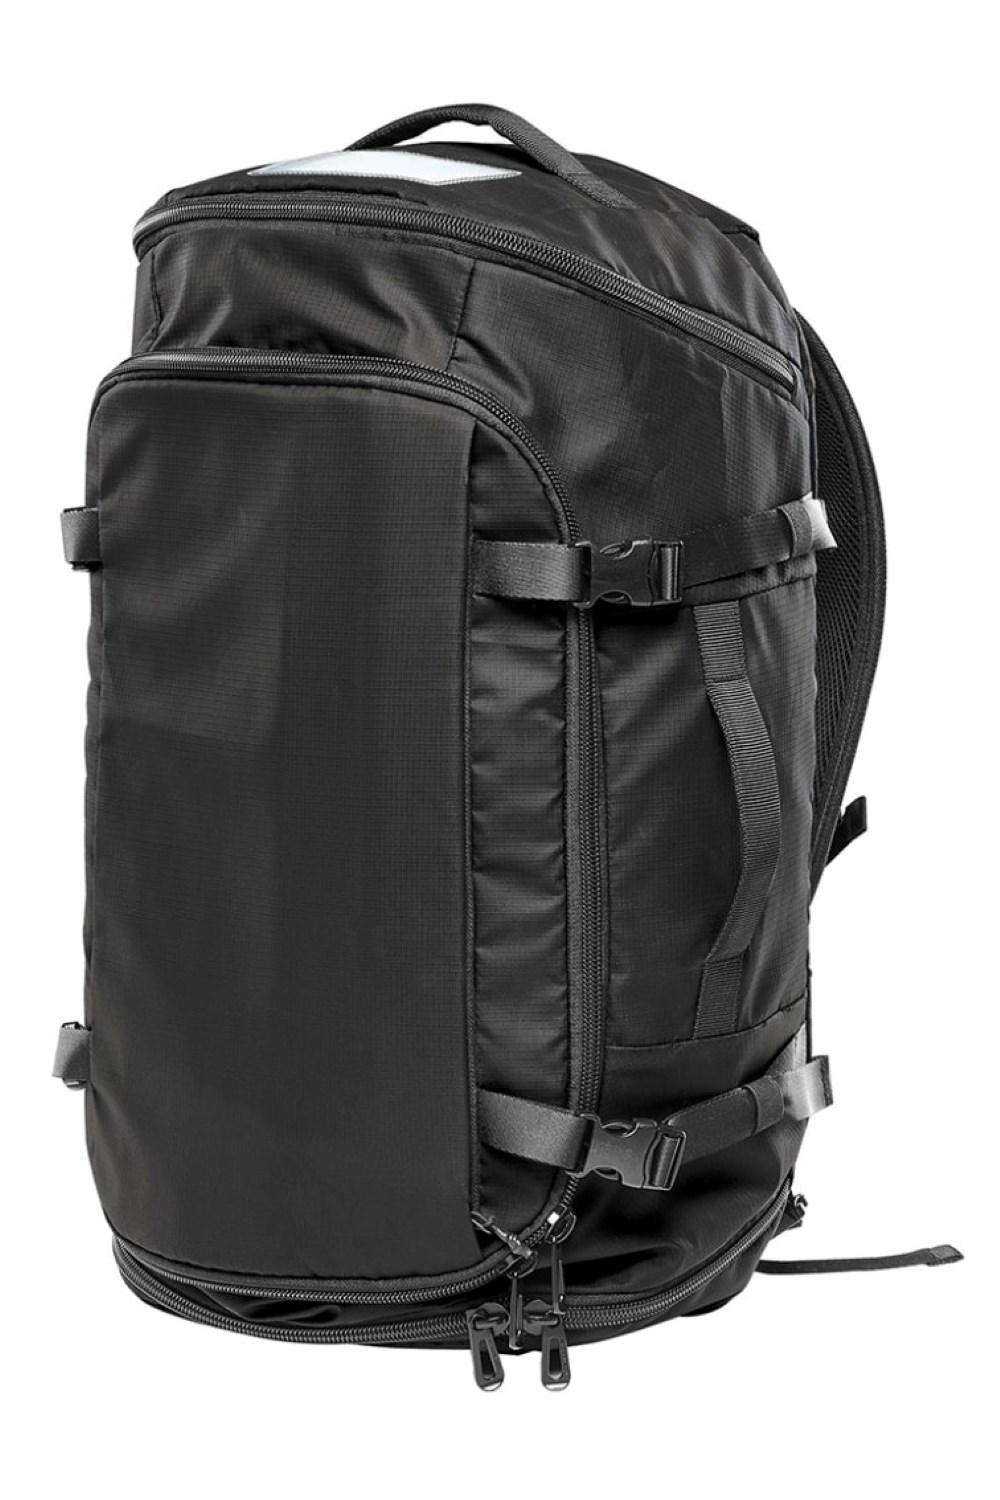 Madagascar 40L Waterproof Backpack -